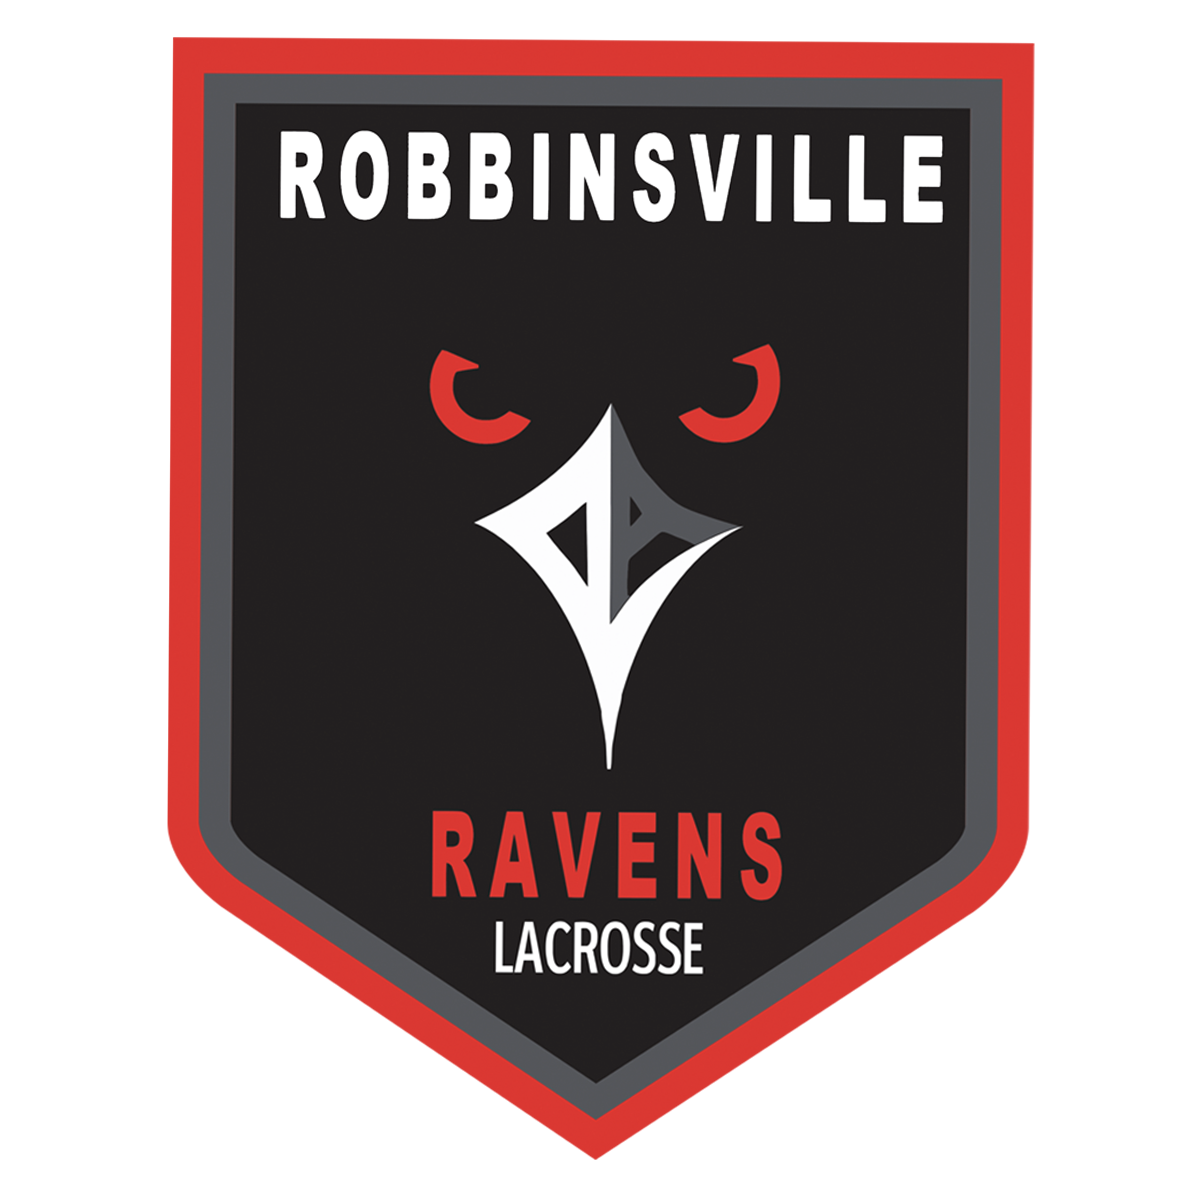 Robbinsville Lacrosse Association Team Store